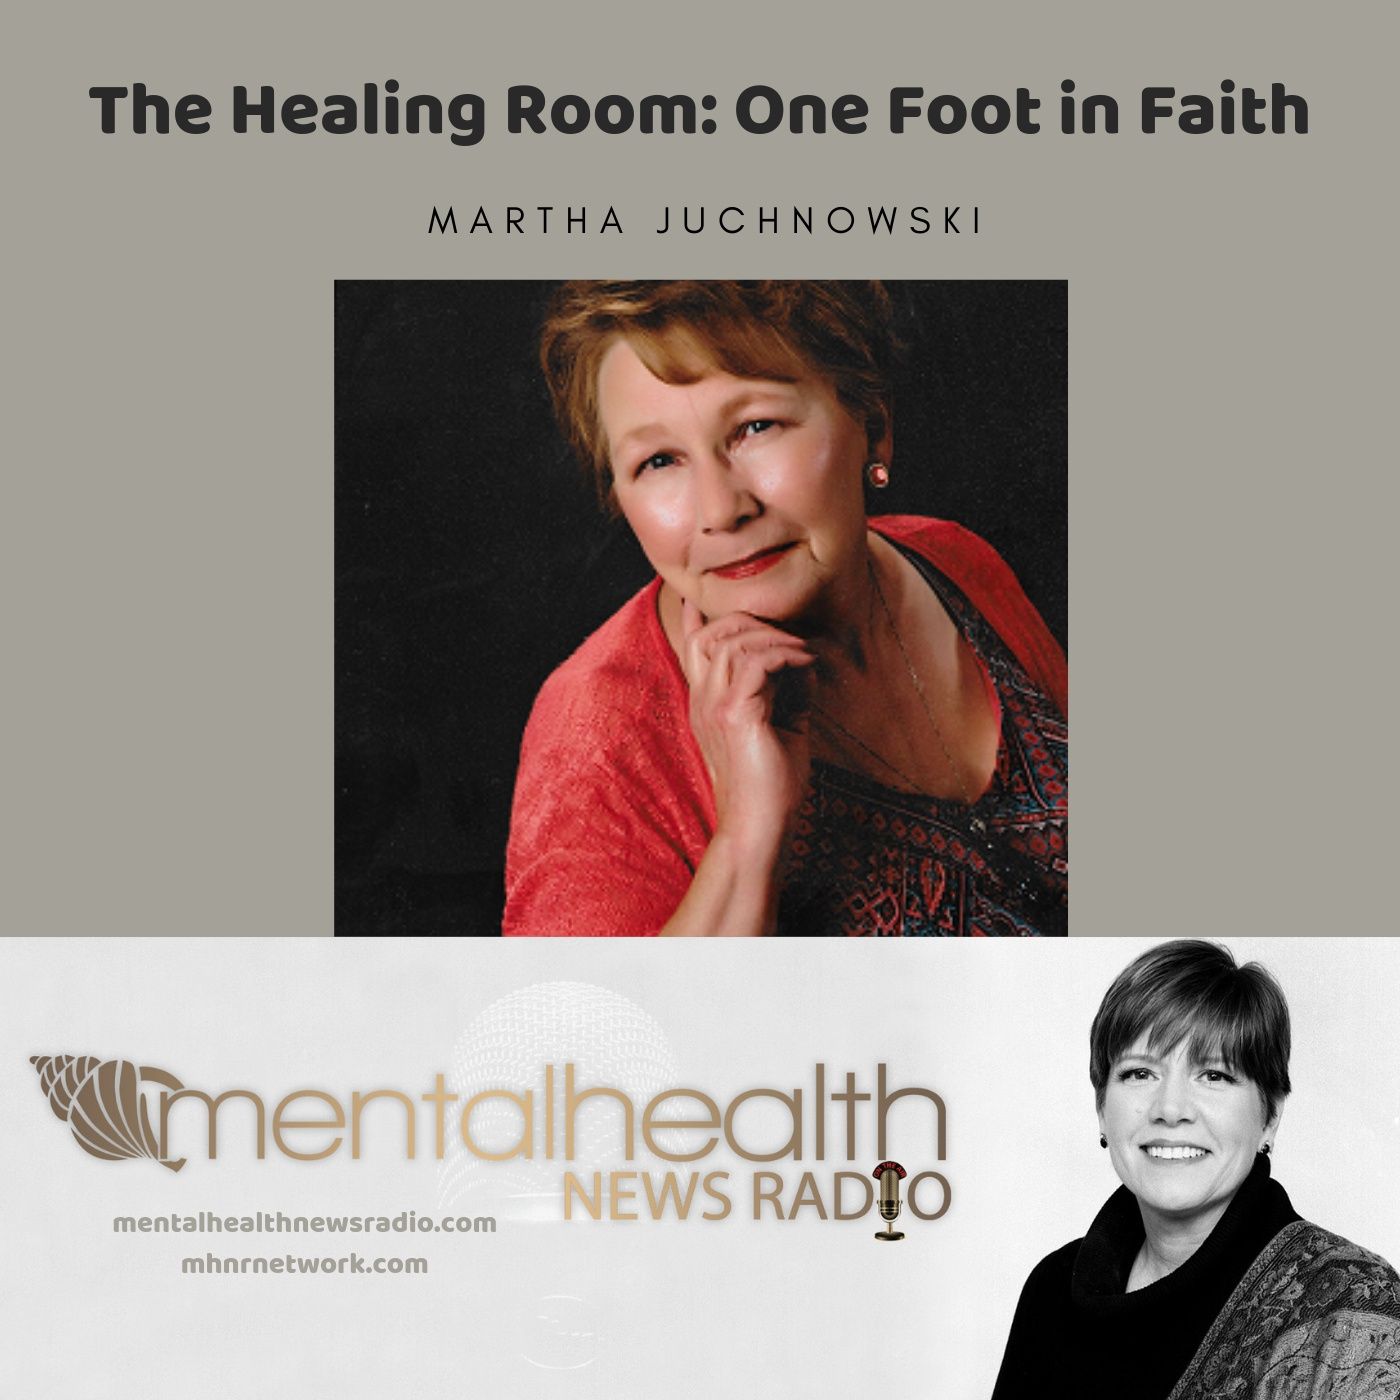 Mental Health News Radio - The Healing Room: Keeping One Foot in Faith